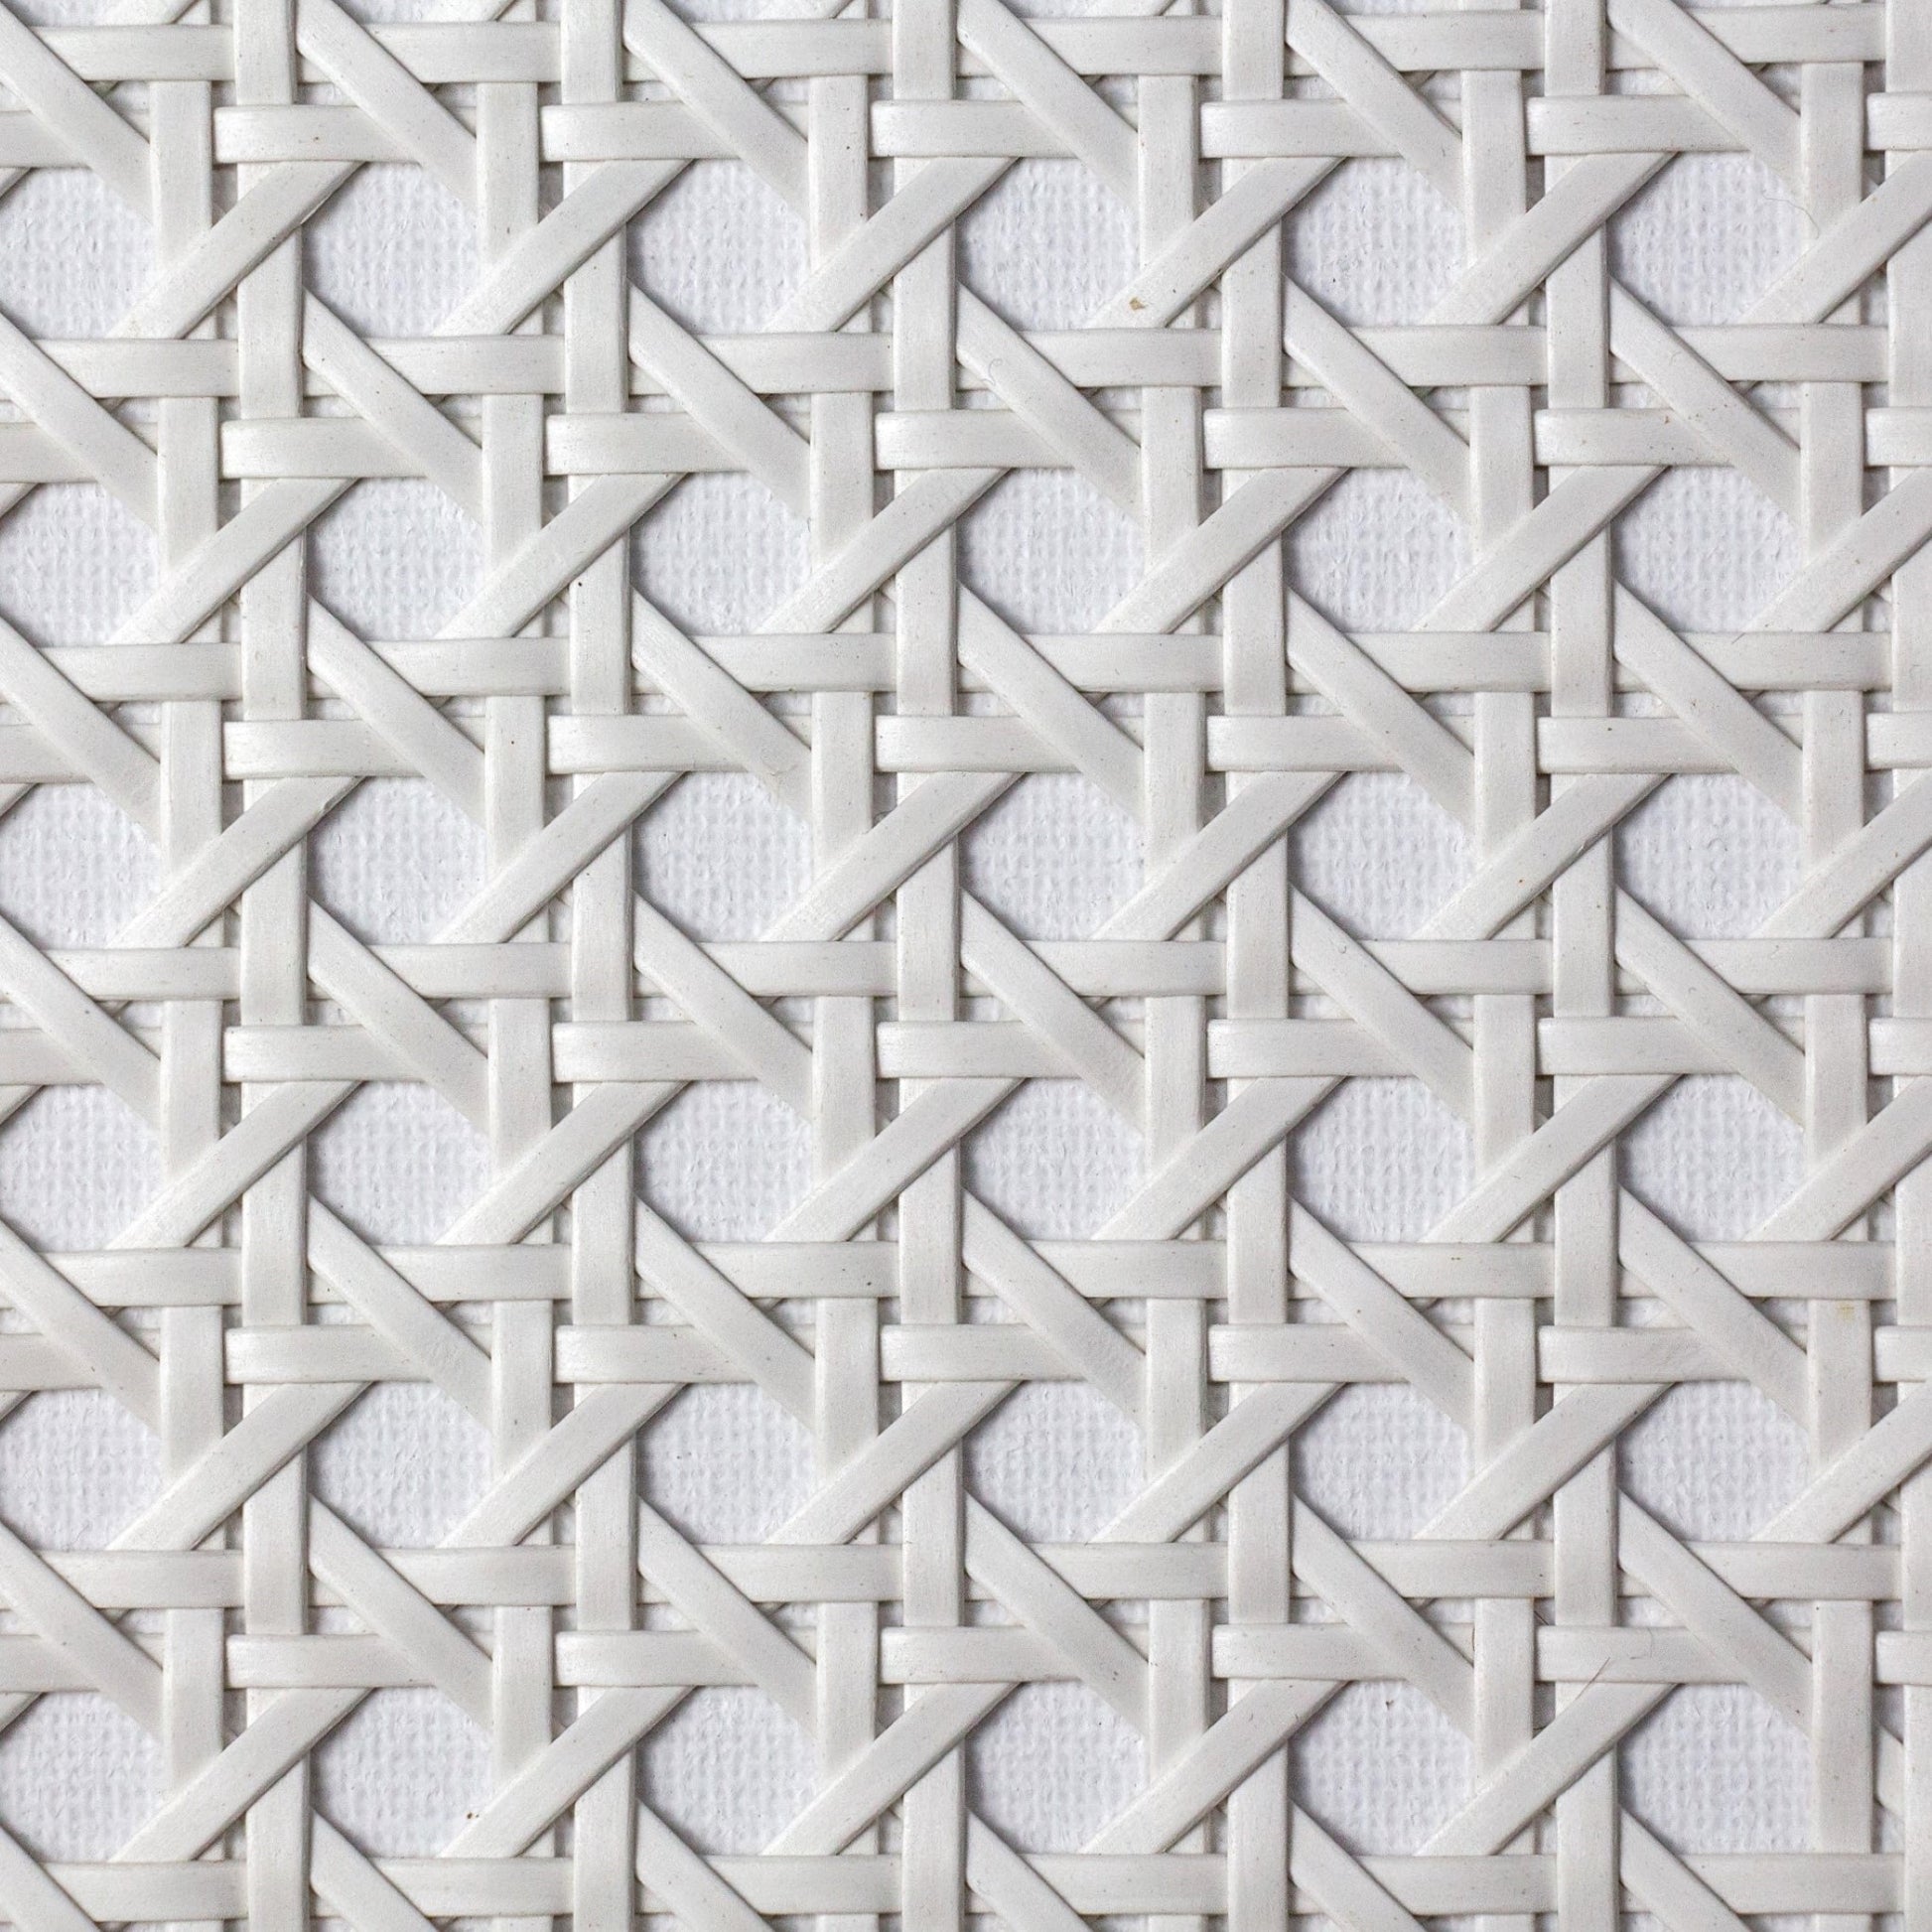 Plastic-Synthetic-Faux-PE-Rattan-Cane-Webbing-Mesh-Roll-Panel-Furniture-Chair-Repair-Open-Weave-Circle-Hexagonal-Melbourne-Australia-White-Grey-2